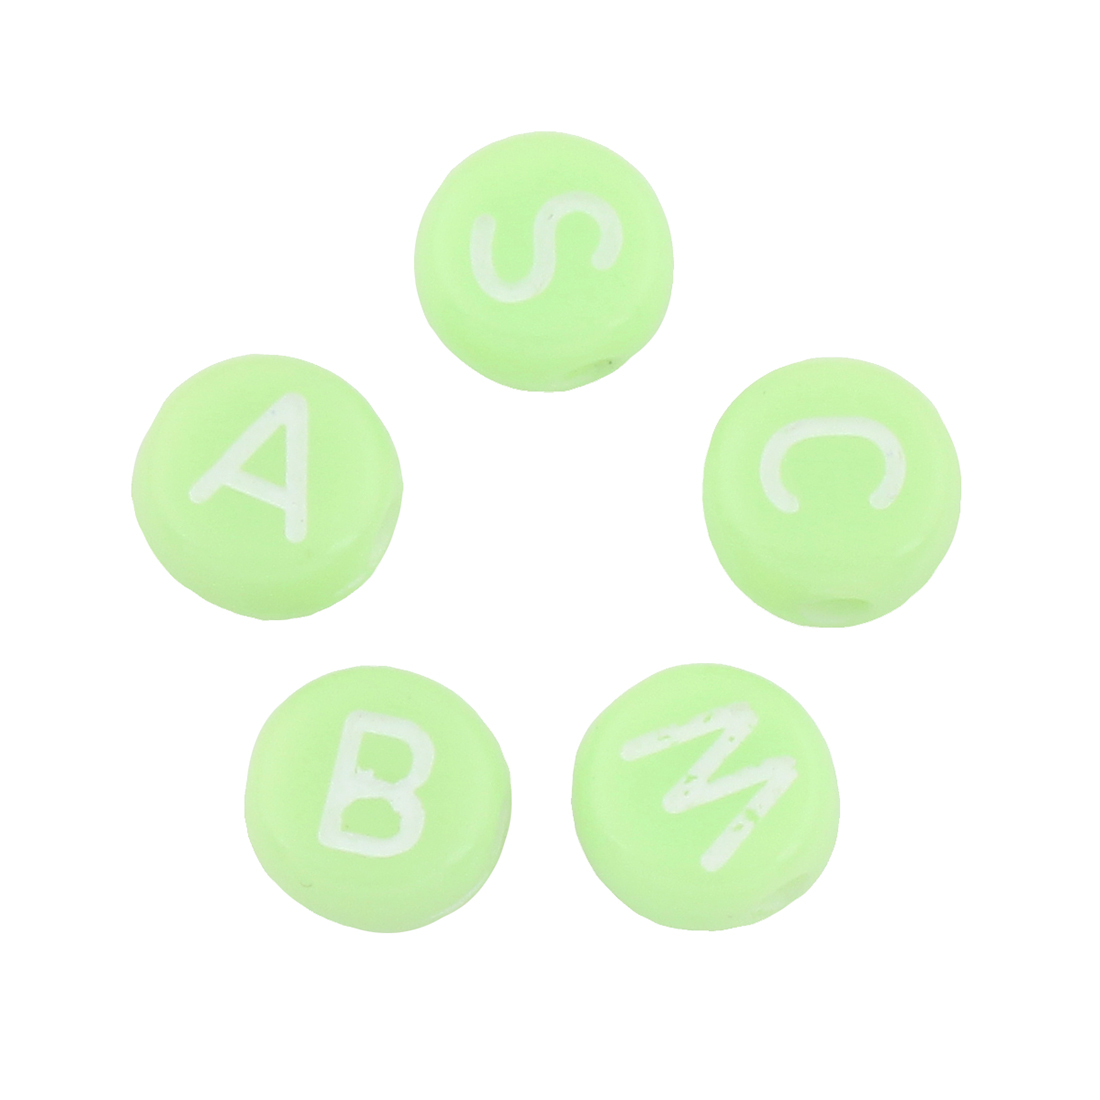 4:apple green